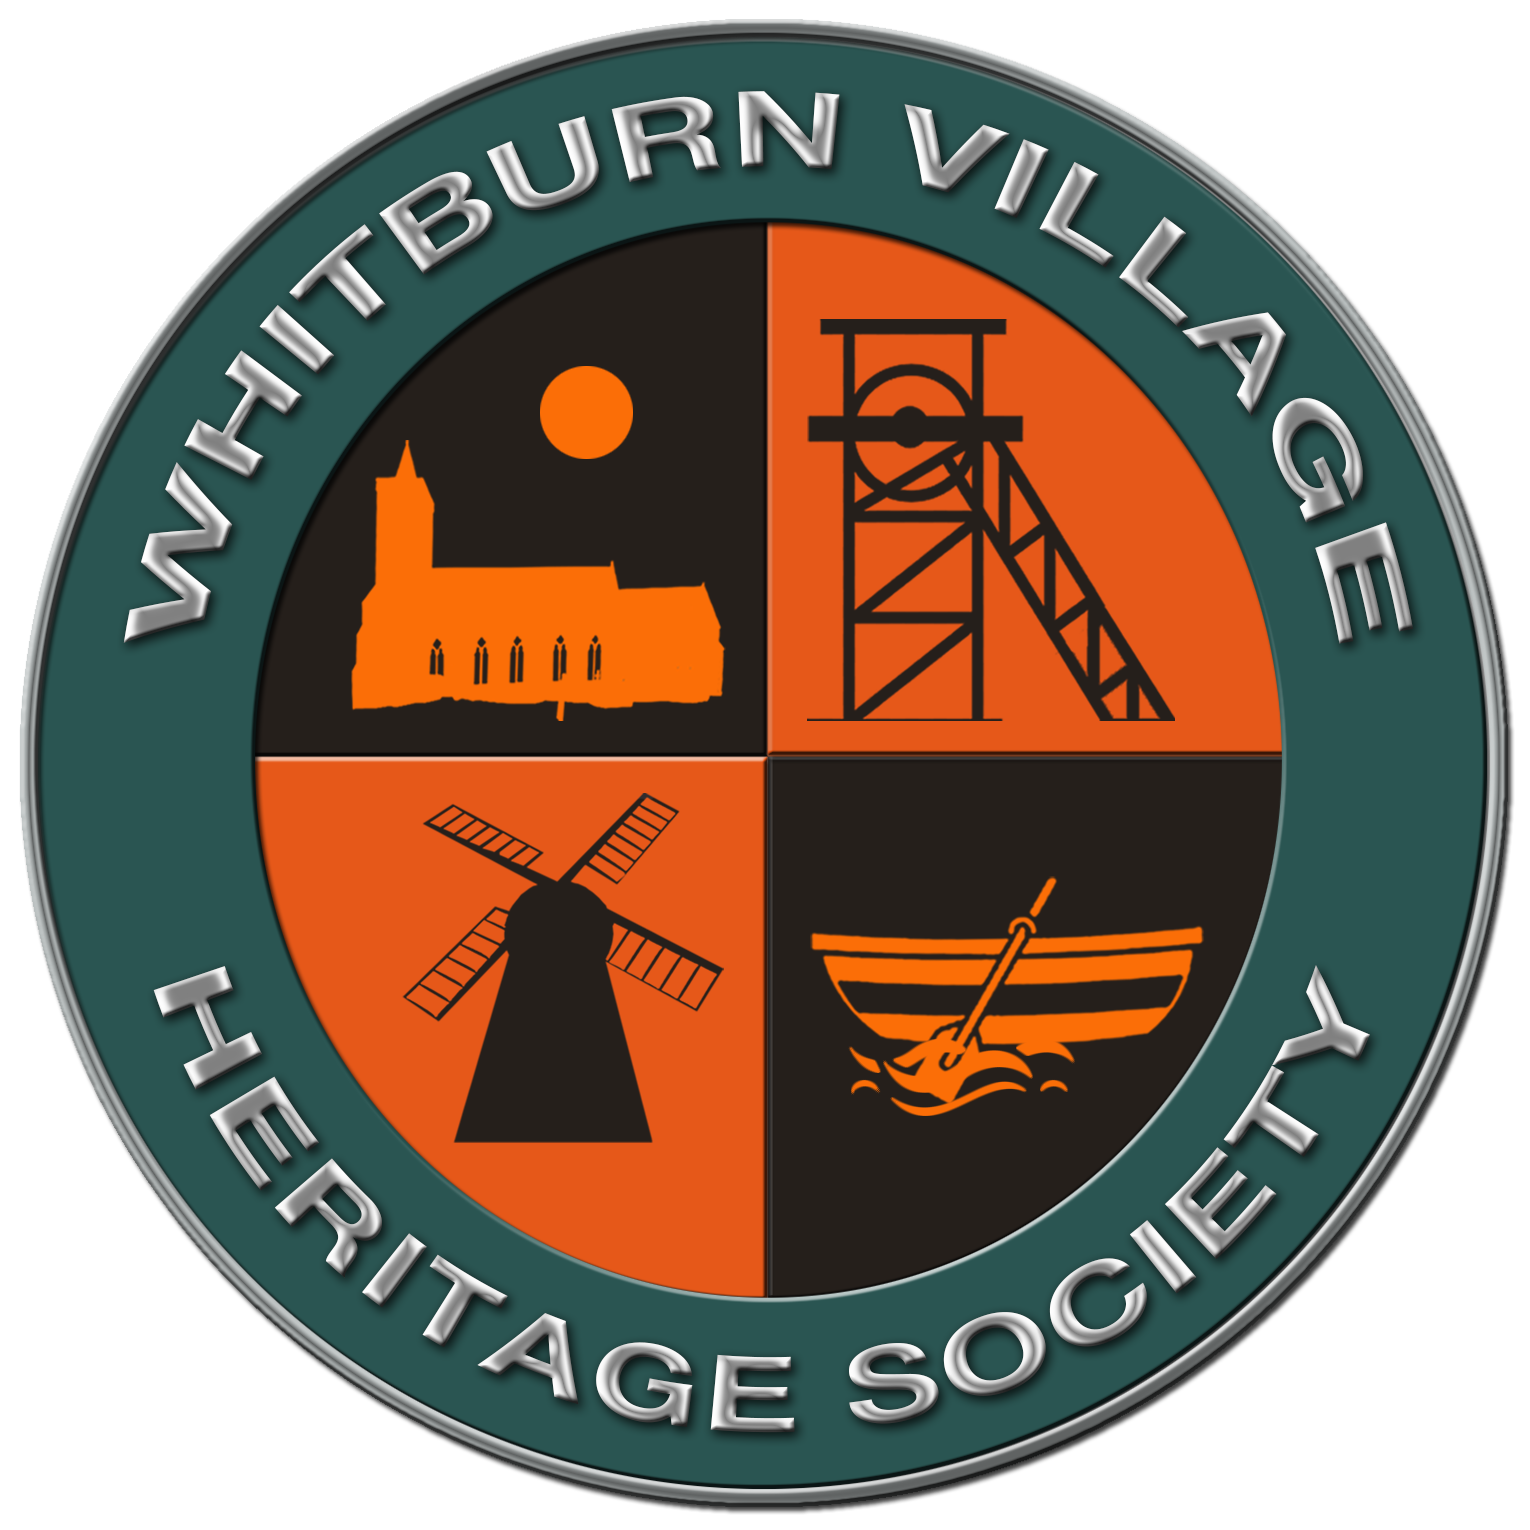 Whitburn Village Heritage Society